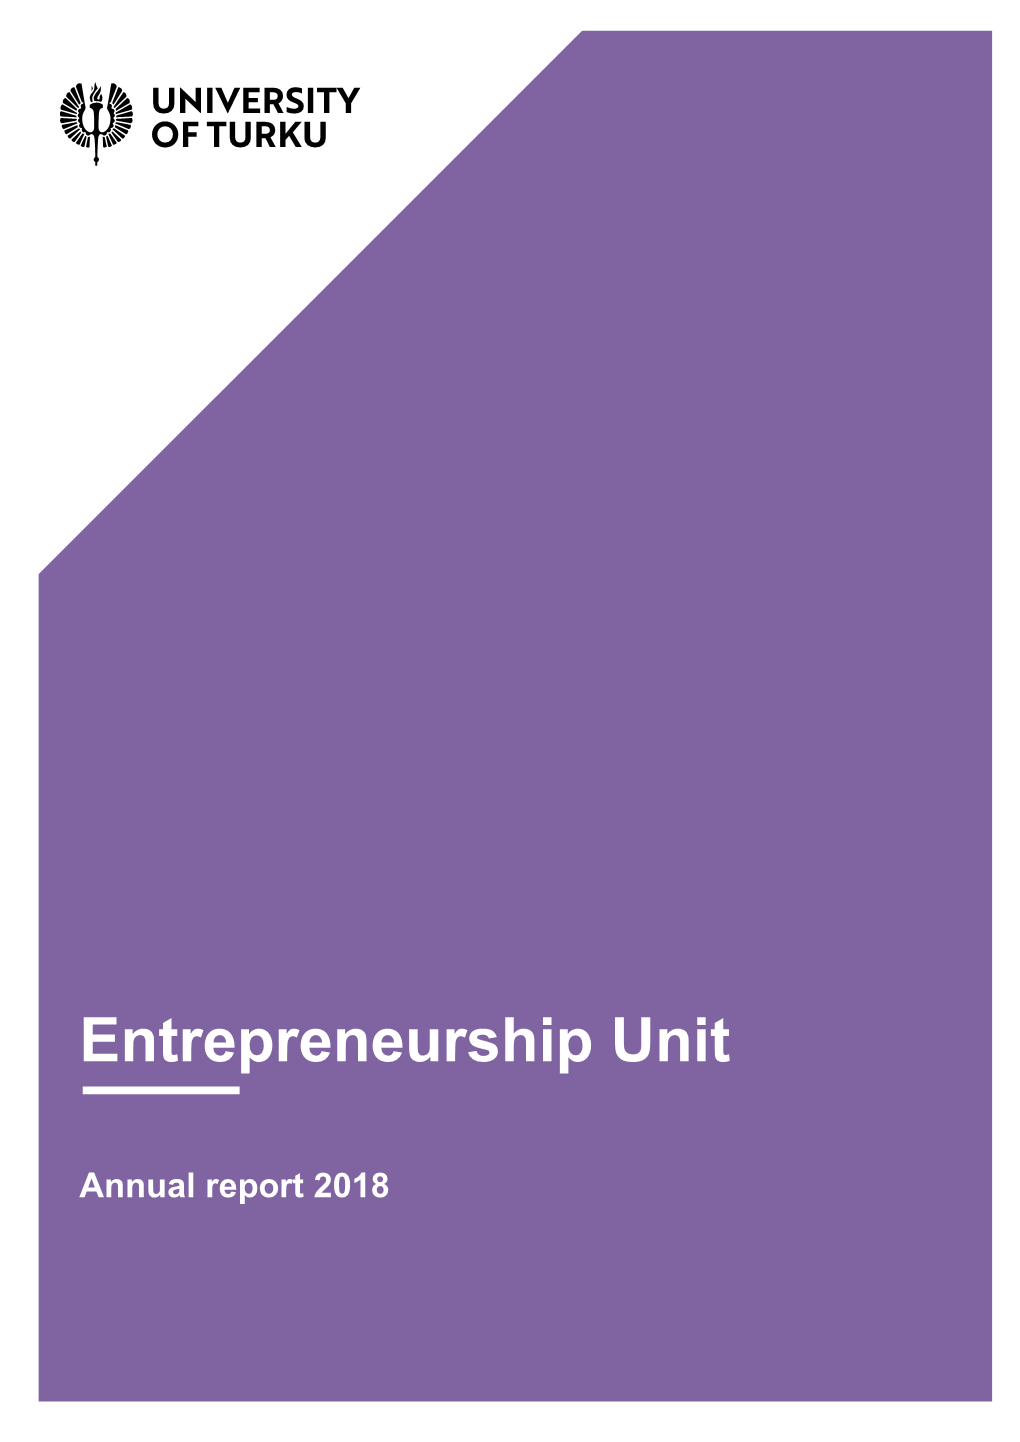 The Annual Report of Entrepreneurship Unit 2018